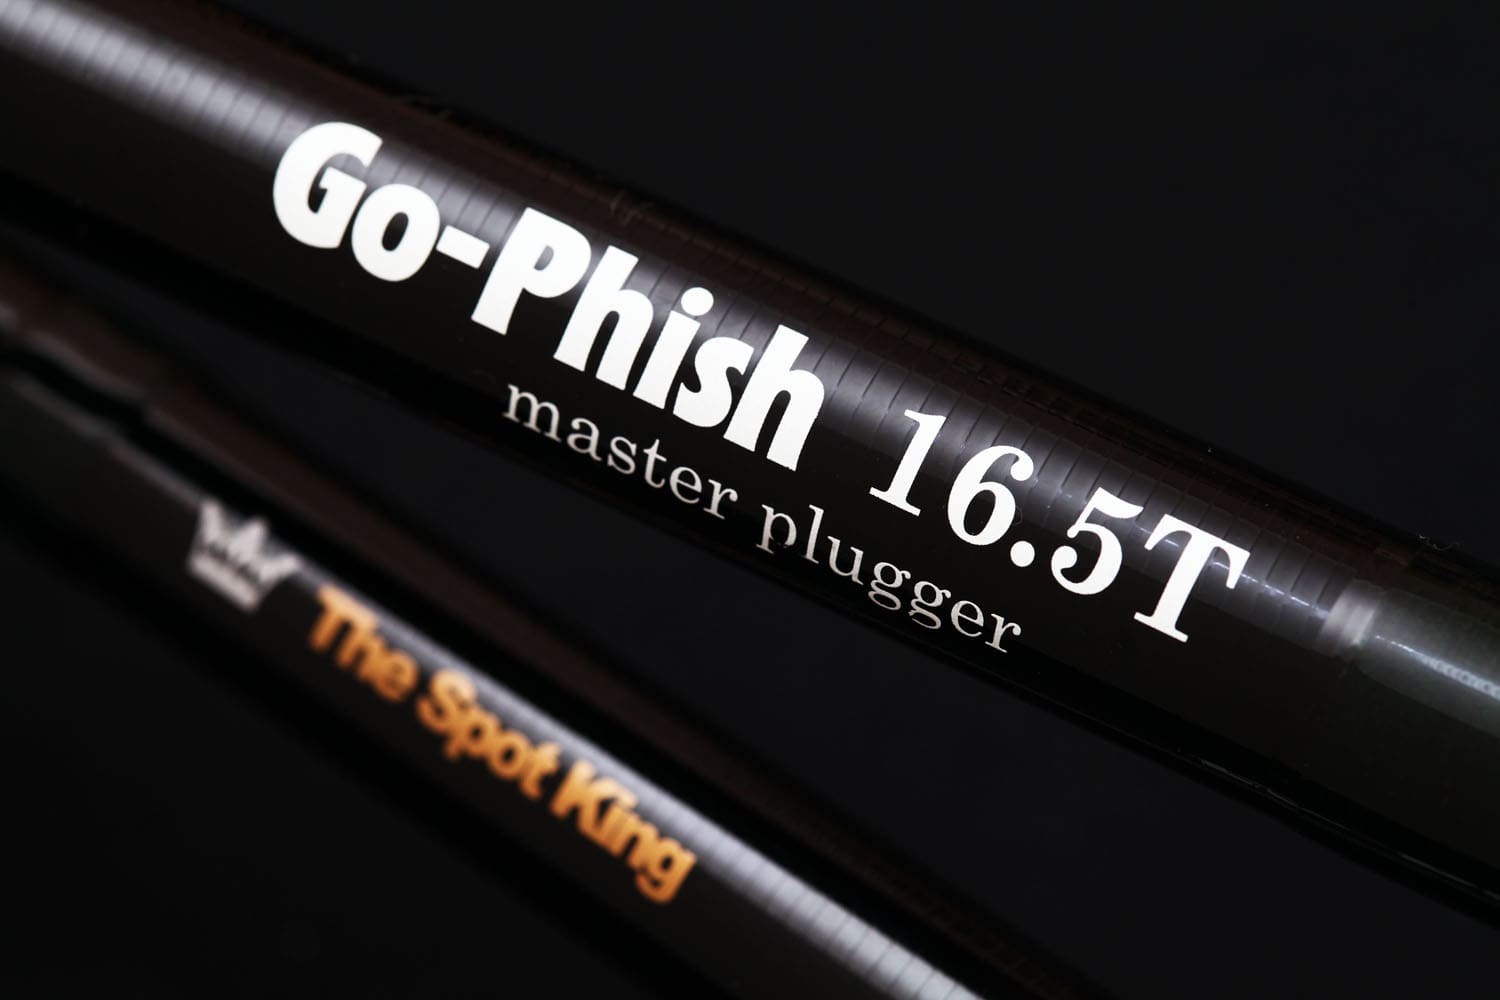 1rod005-master plugger16.5